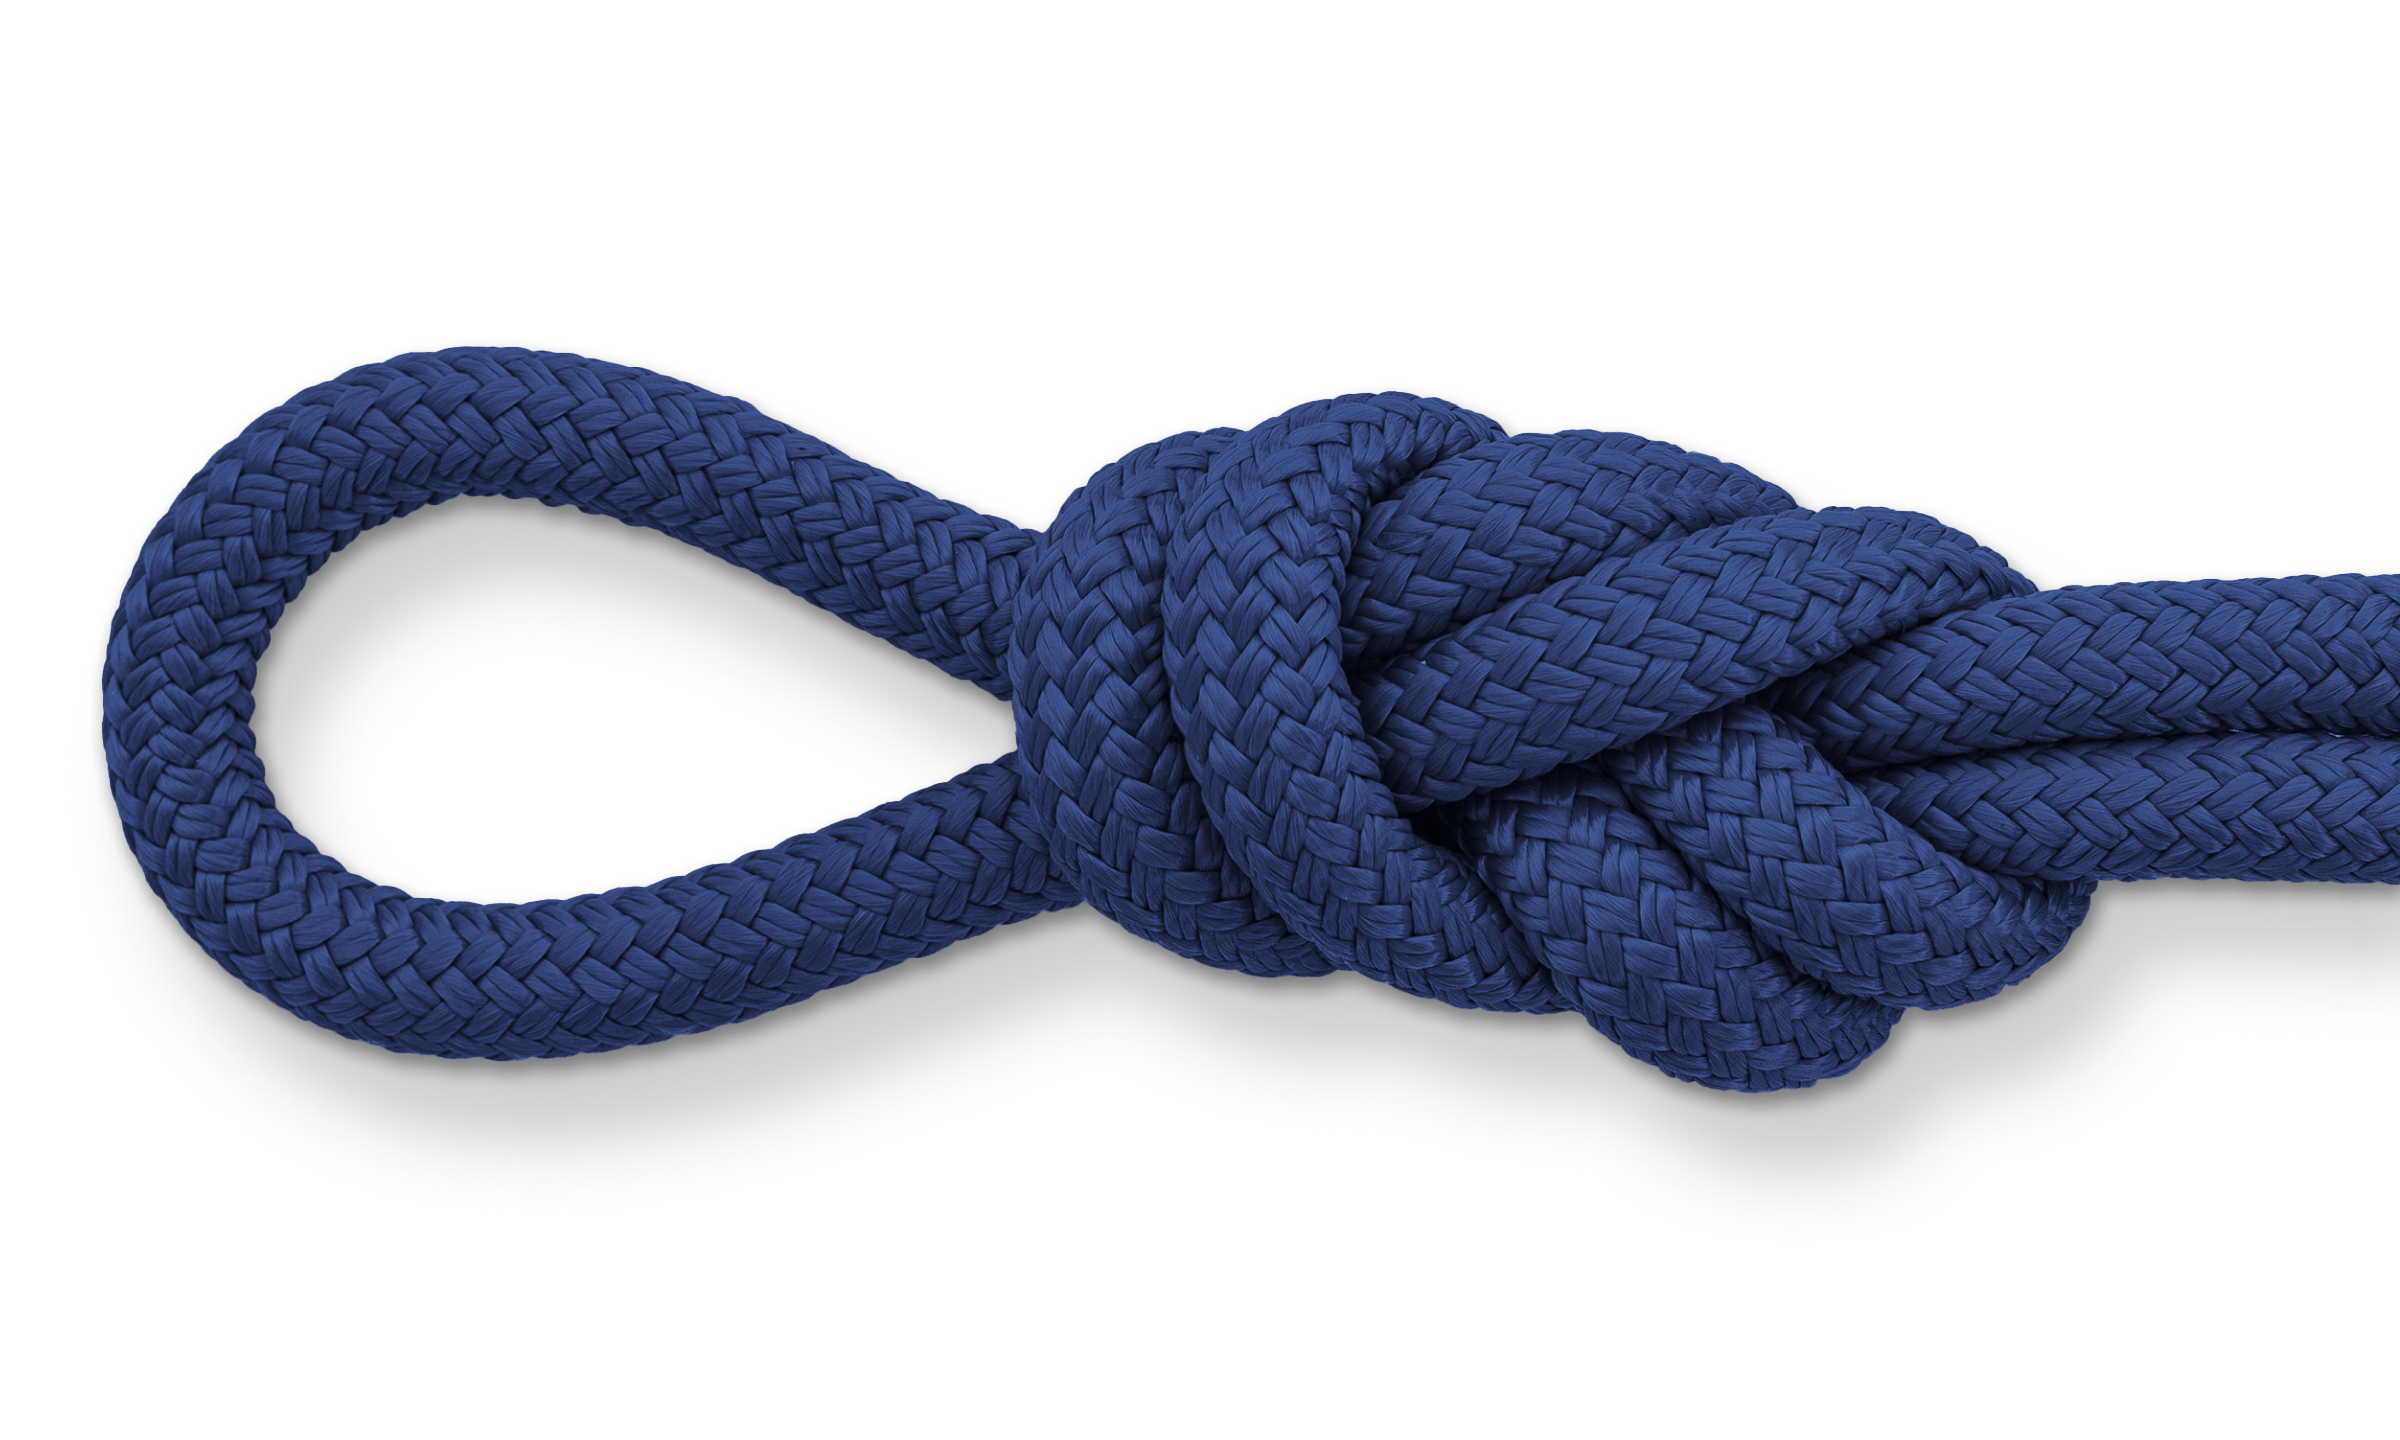 Black Double Braid Nylon Rope 1/2 inch by 50 feet